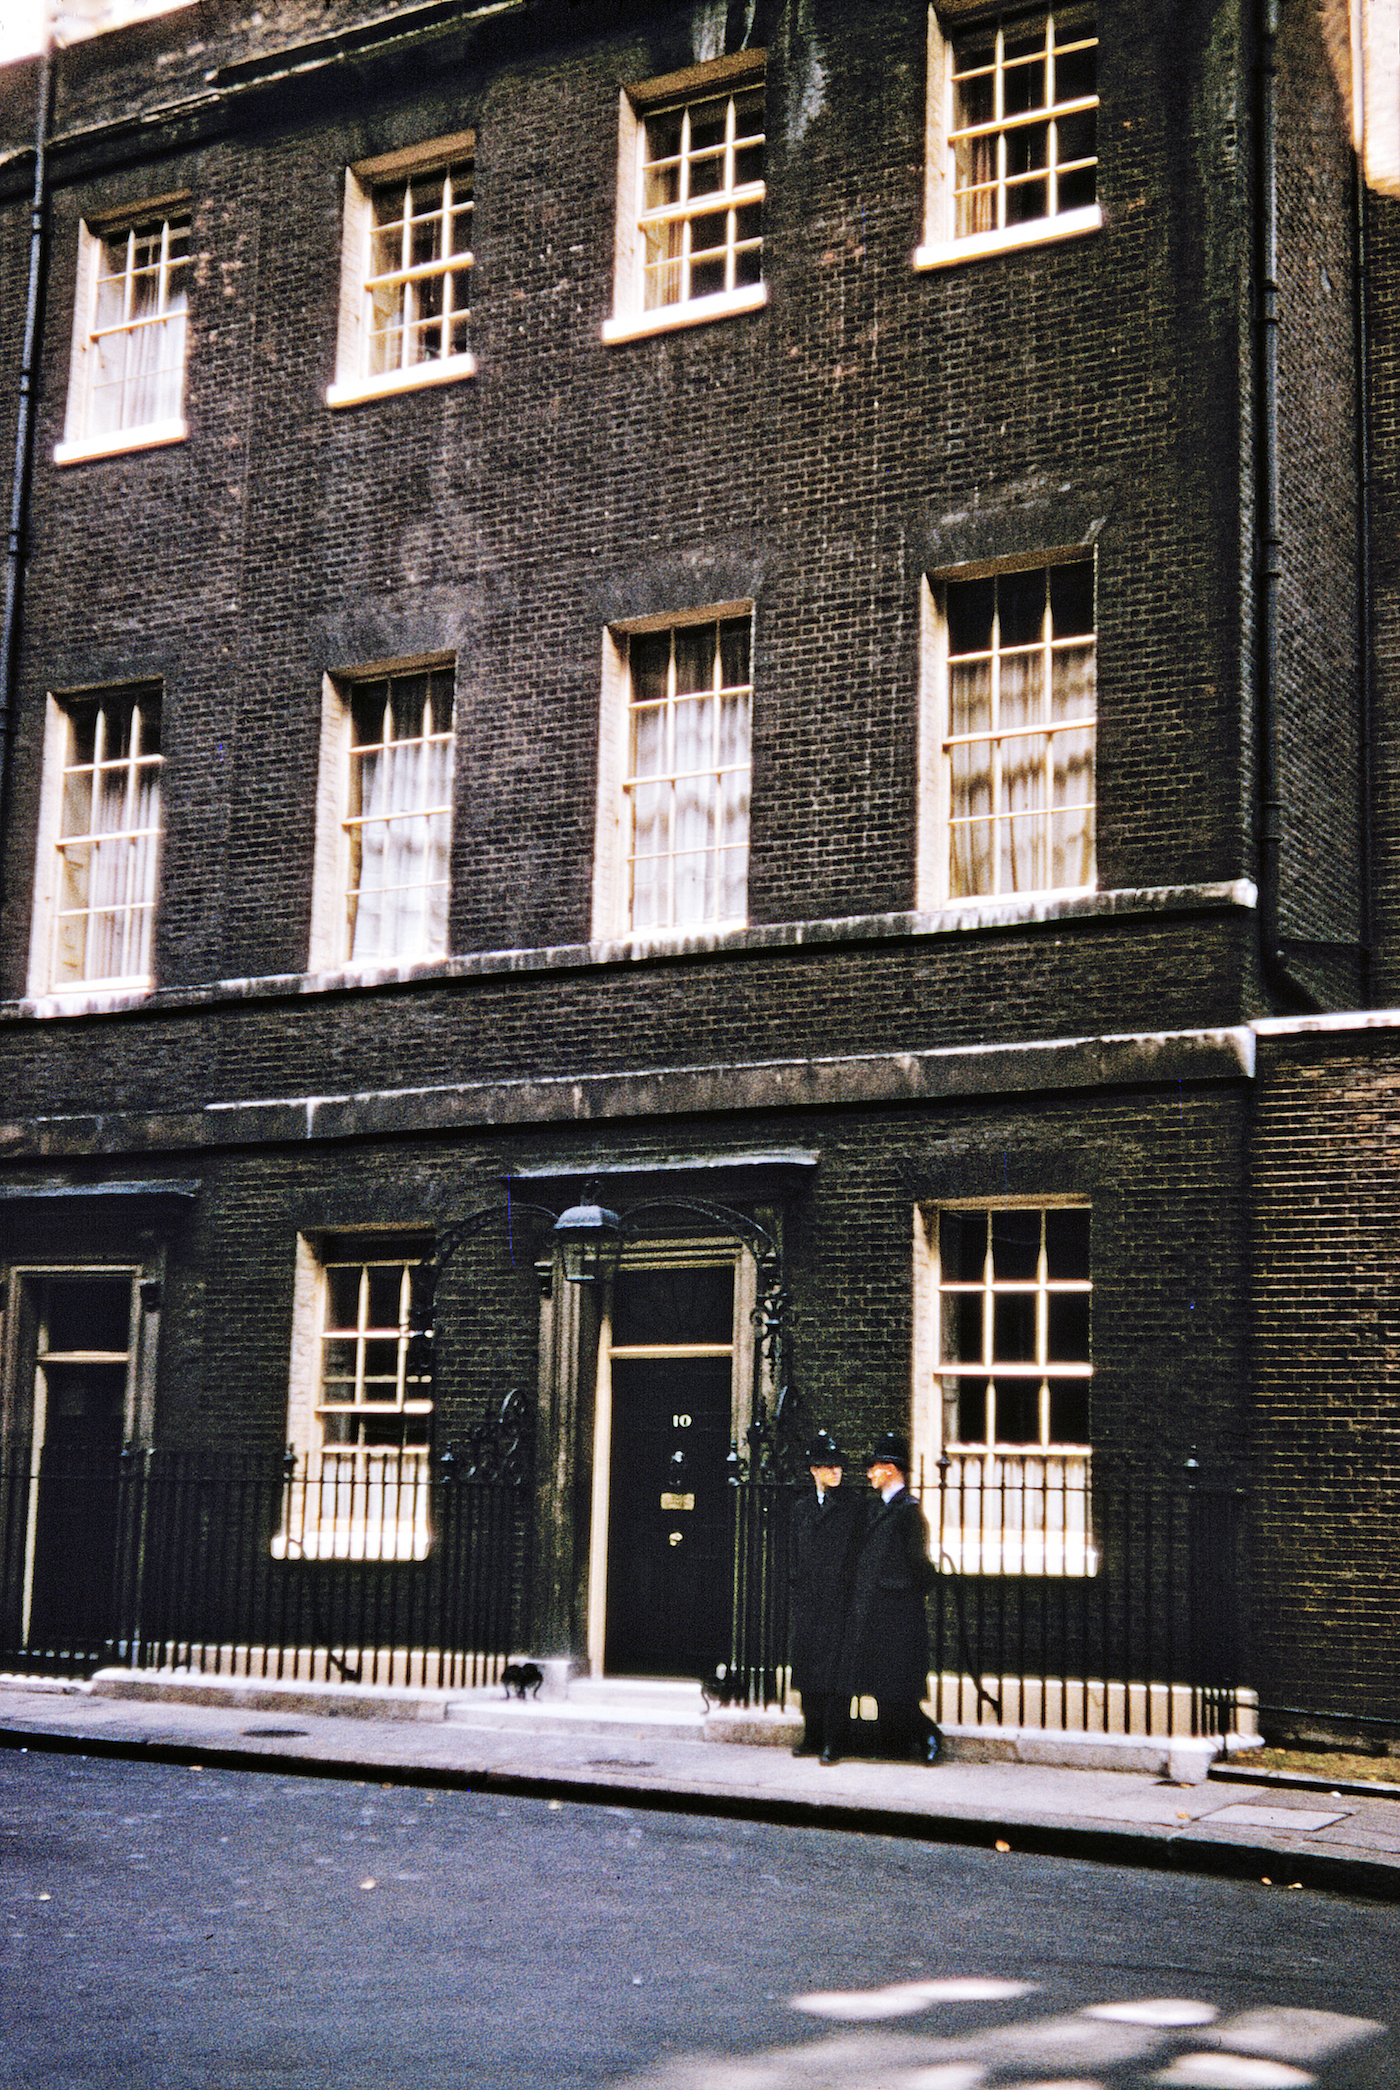 Number 10, Downing Street, London, England, 1956 - Flashbak